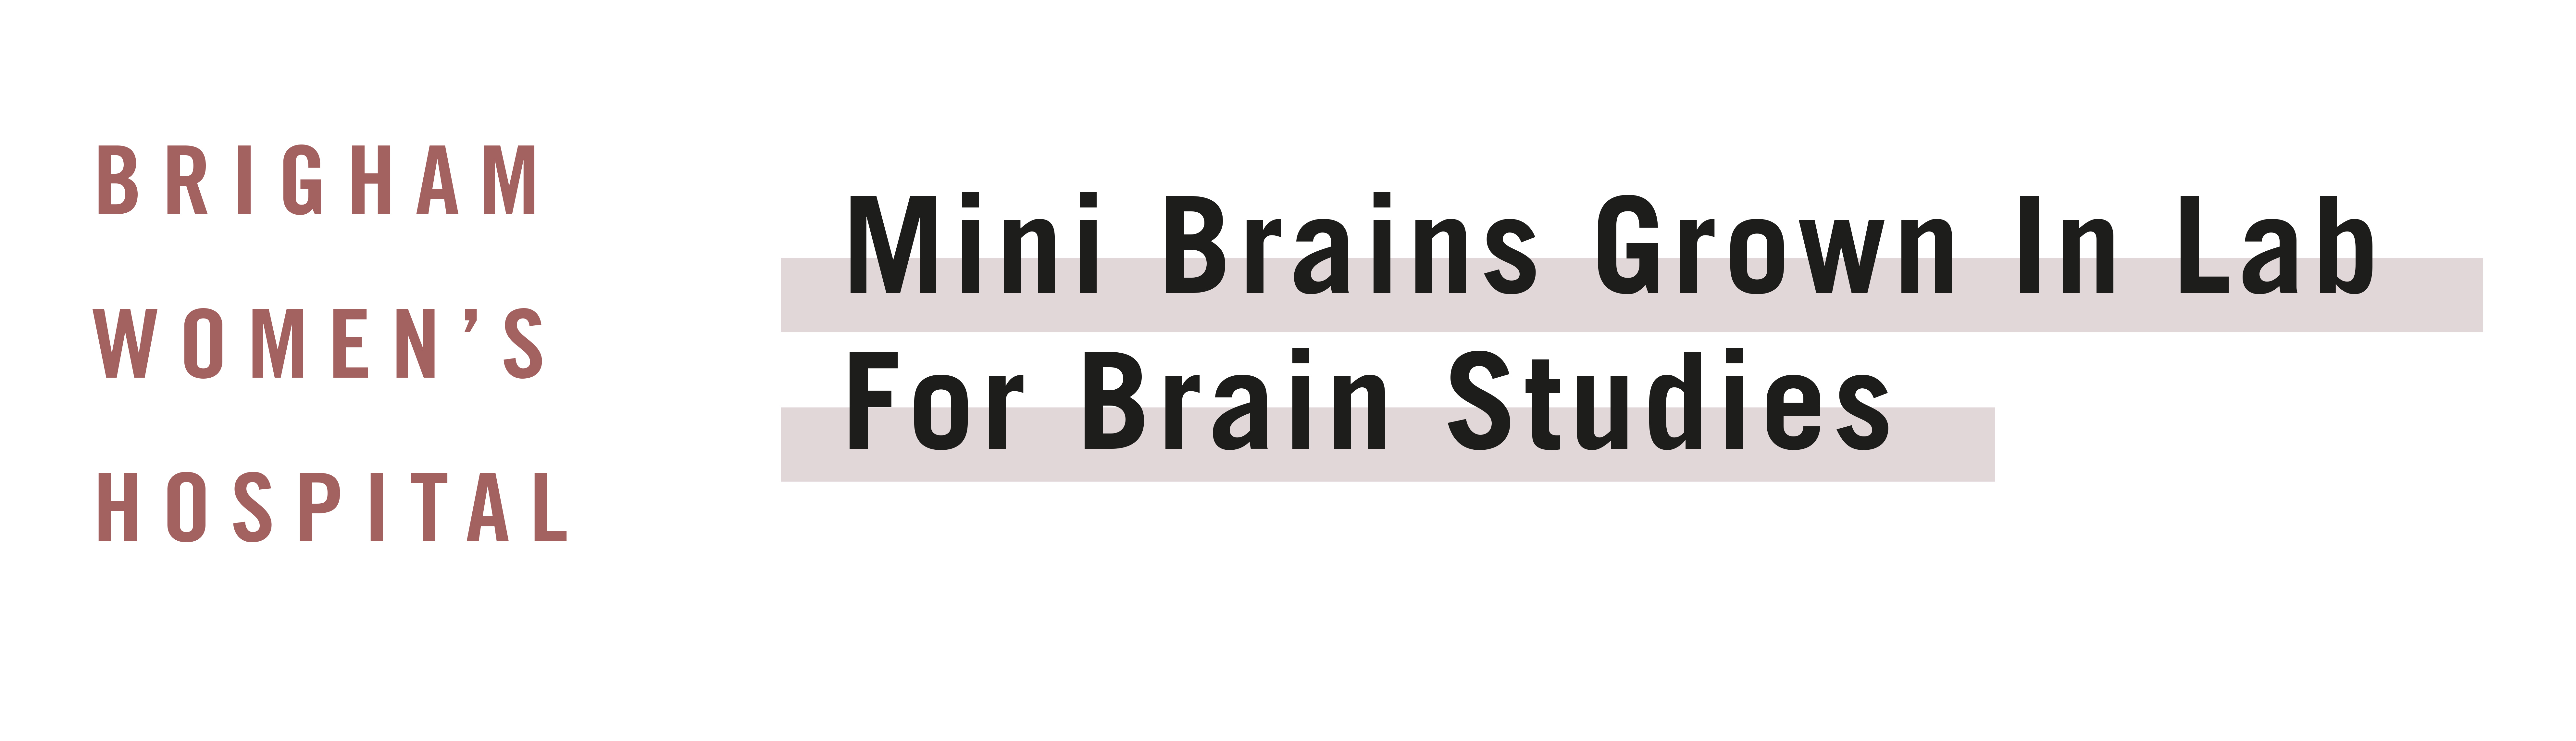 Mini-Brains Grown in Lab for Brain Studies